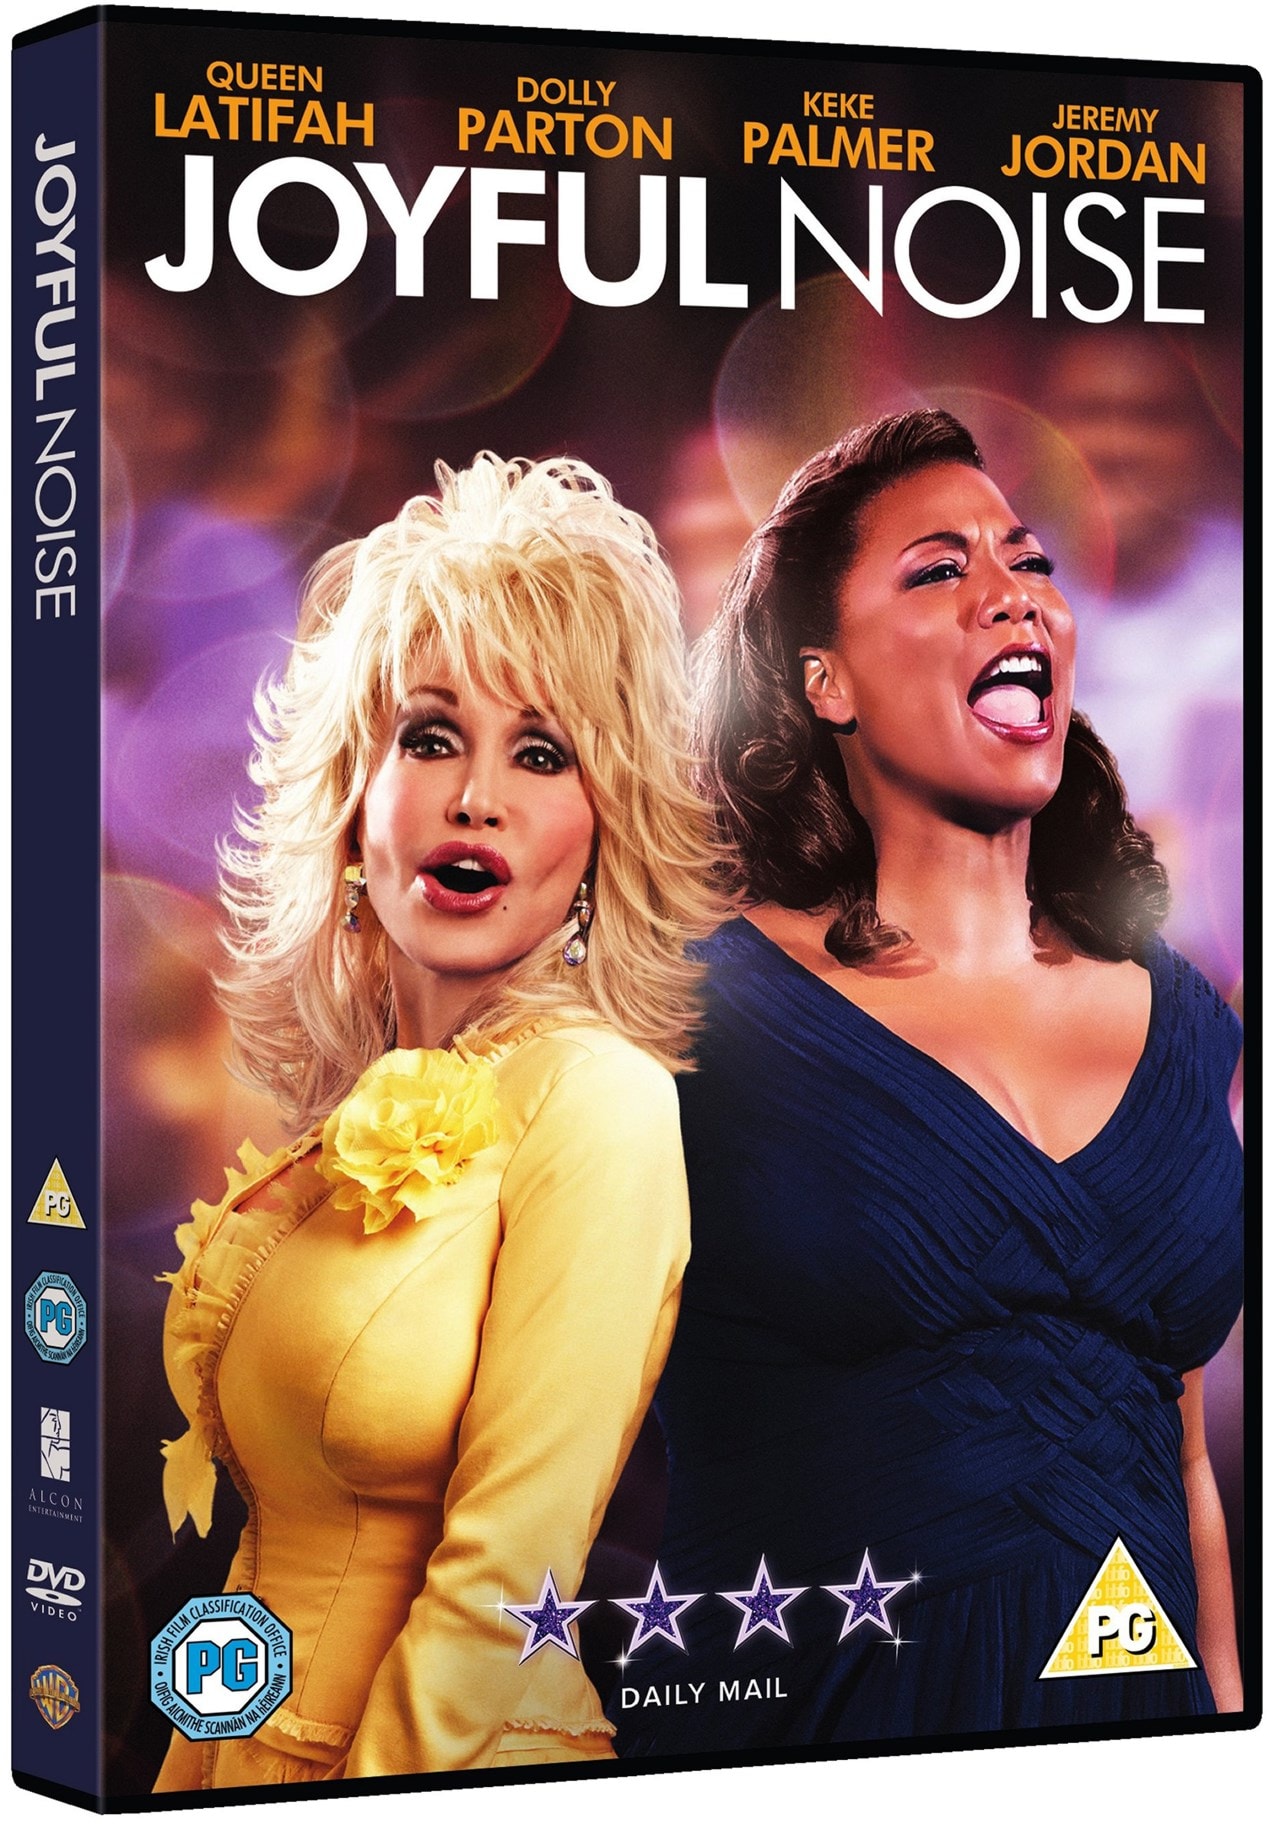 Joyful Noise | DVD | Free shipping over £20 | HMV Store